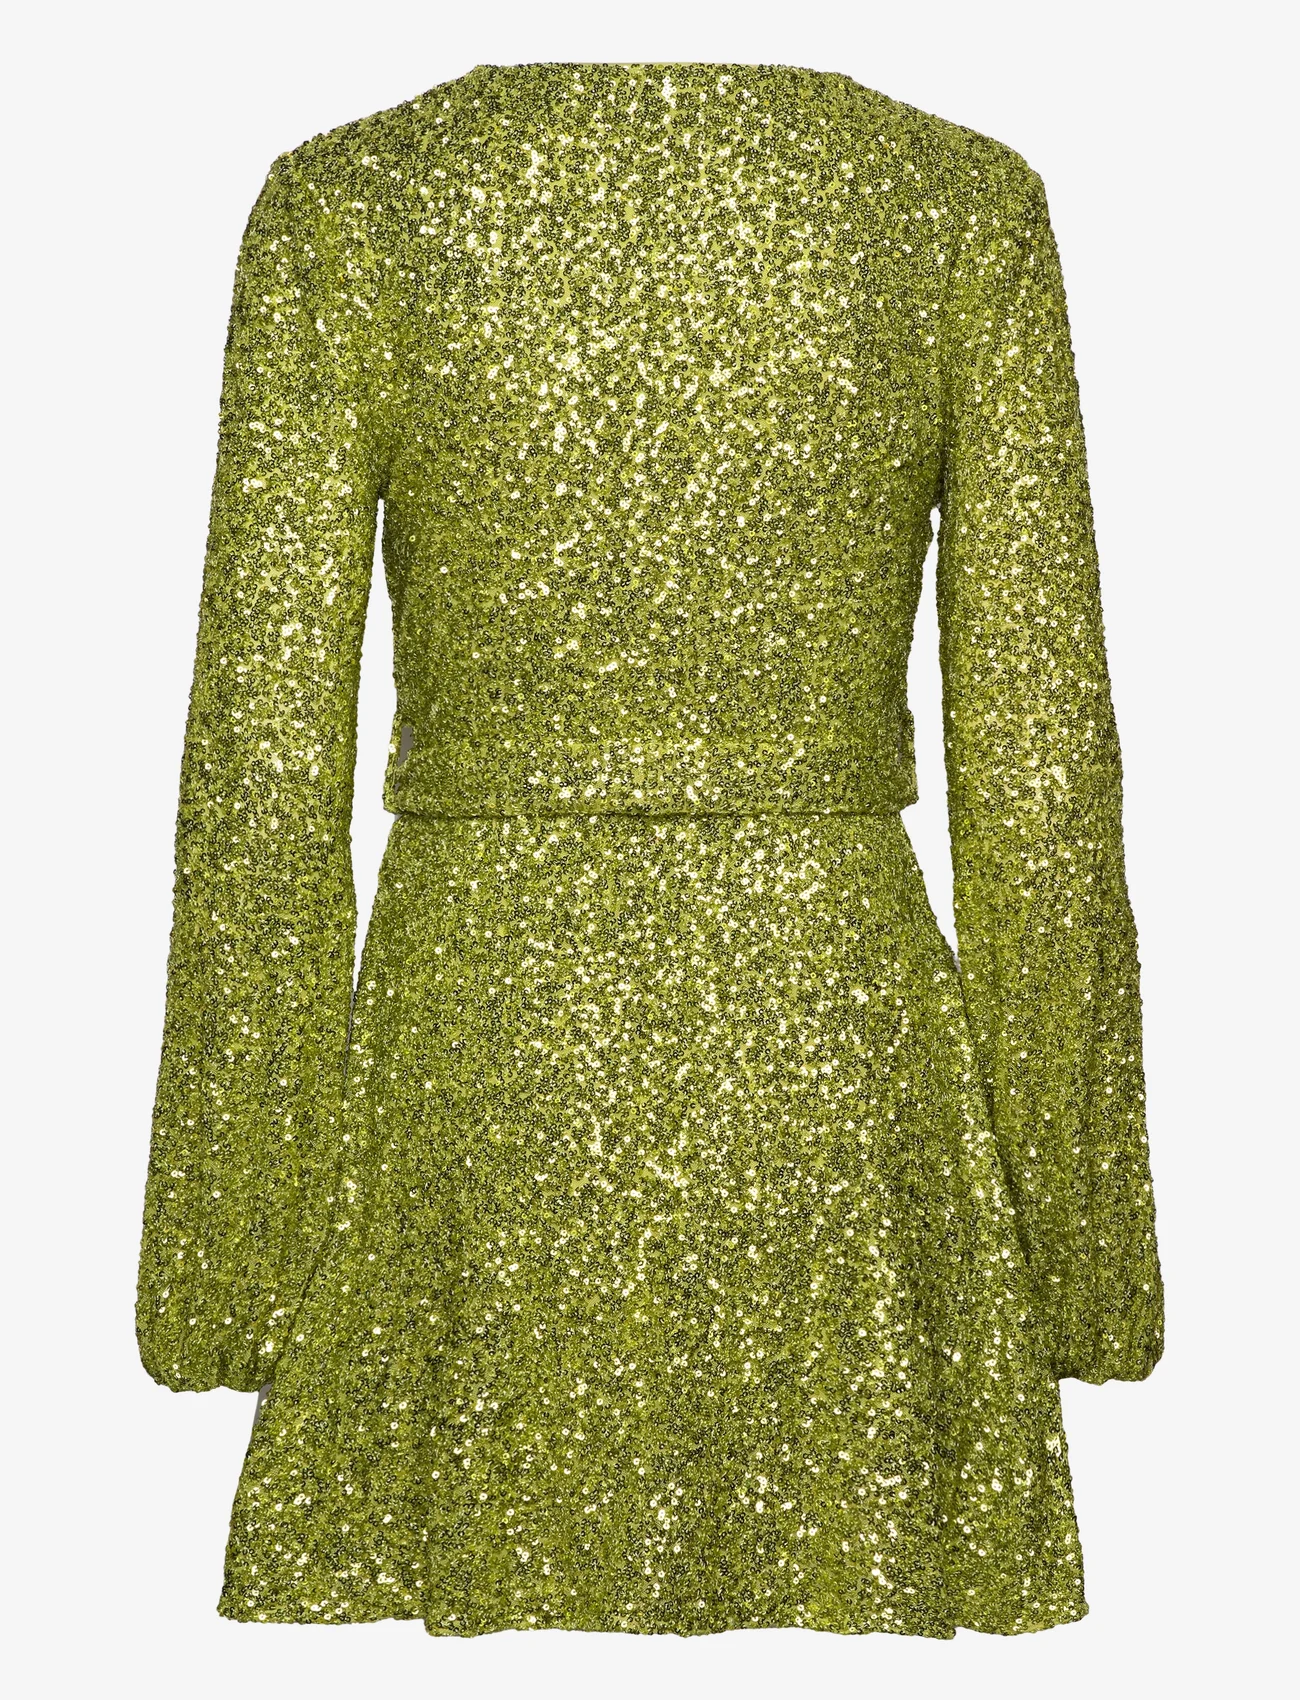 Bardot - SEQUIN BELLISSA DRESS - ballīšu apģērbs par outlet cenām - lime - 1